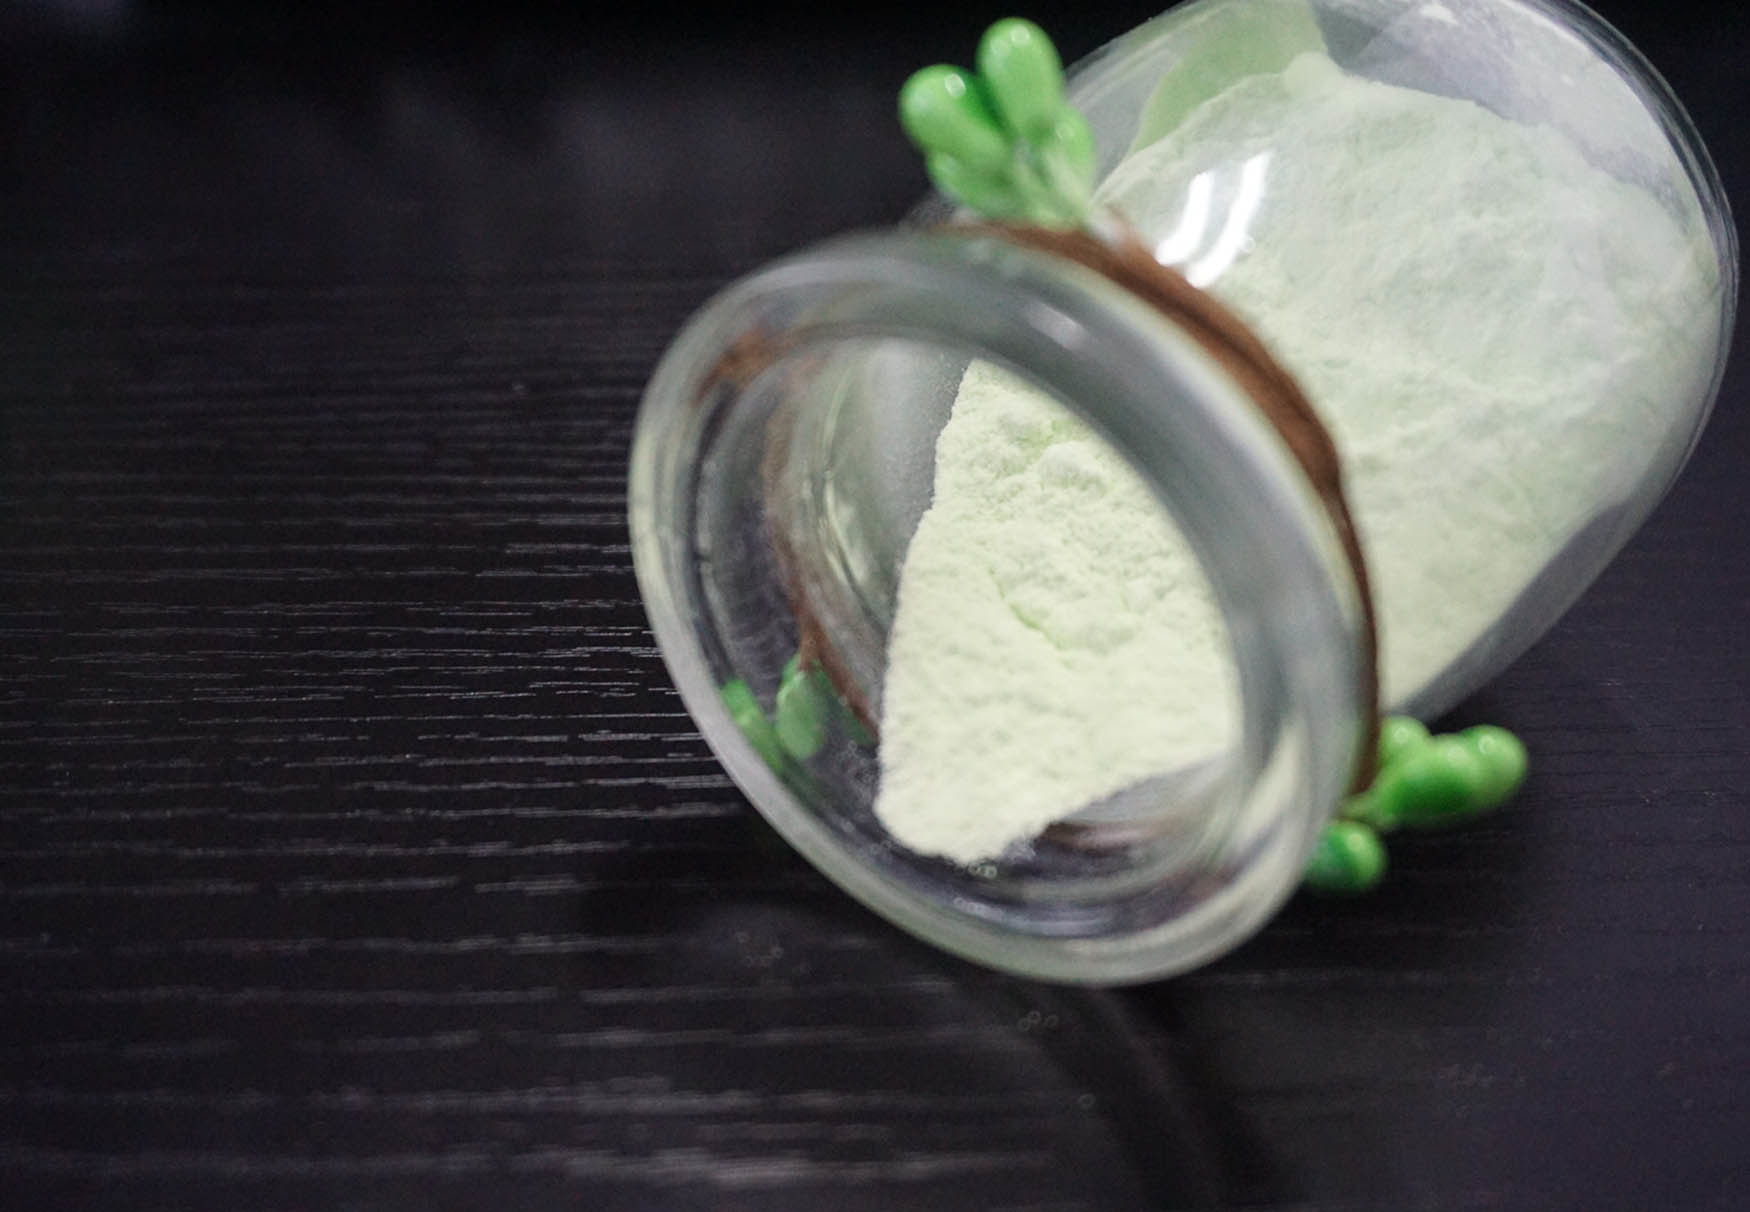 Melamina da cor verde que molda a matéria prima plástica composta dos utensílios de mesa